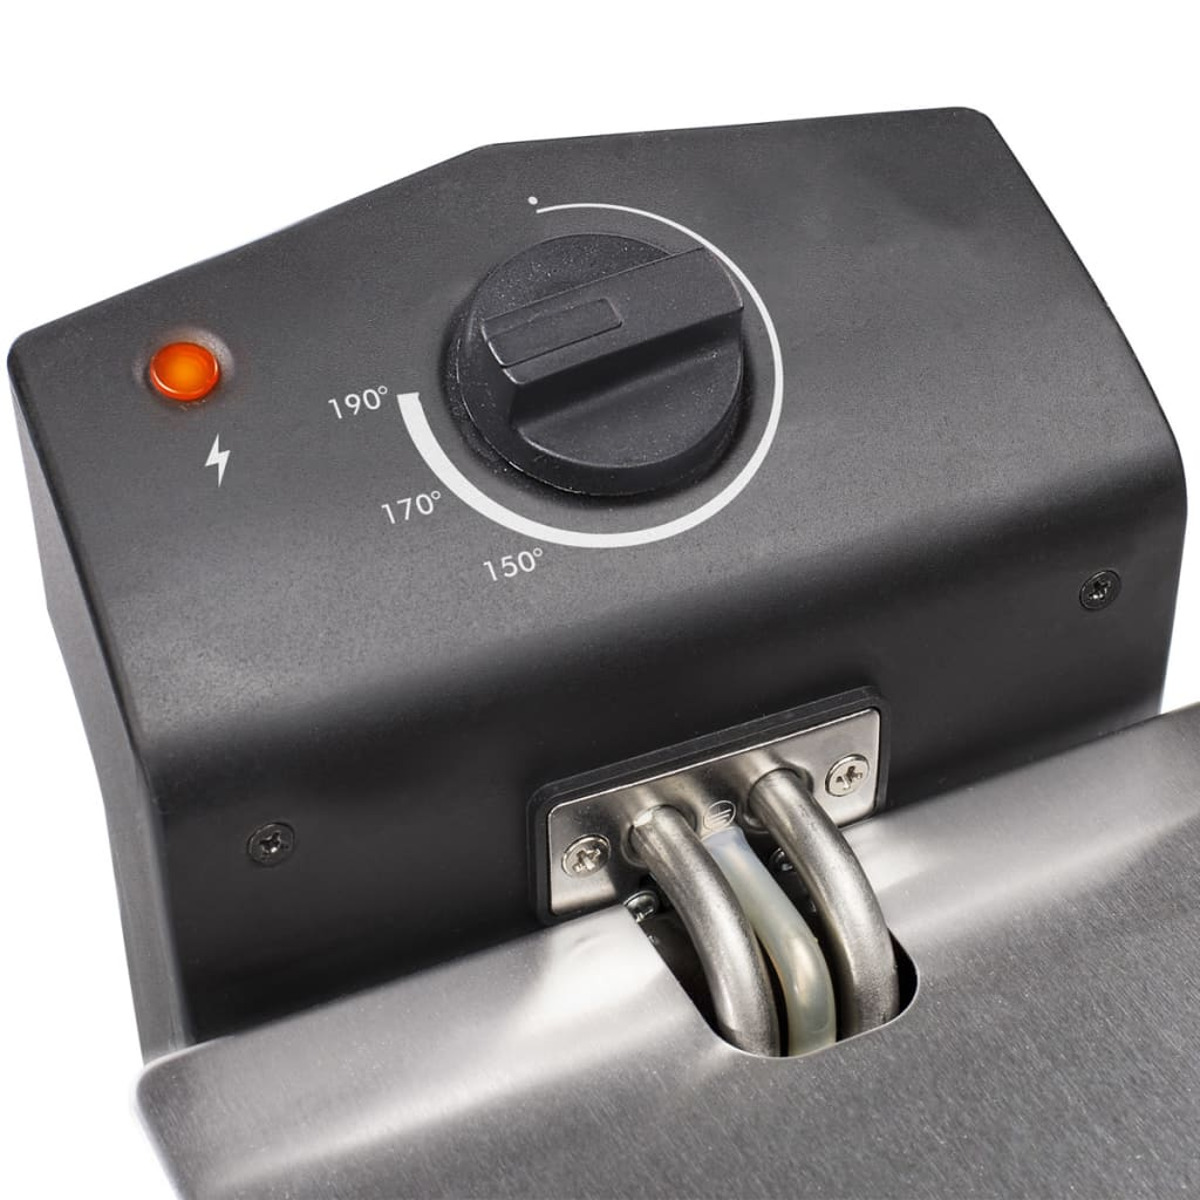 Thermostat 2000 Fritteuse Große & Watt Kaltzonen Watt 2000 Liter Emaille-Behälter 3 regelbarem TRISTAR mit Kaltzonen Fritteuse, Silber